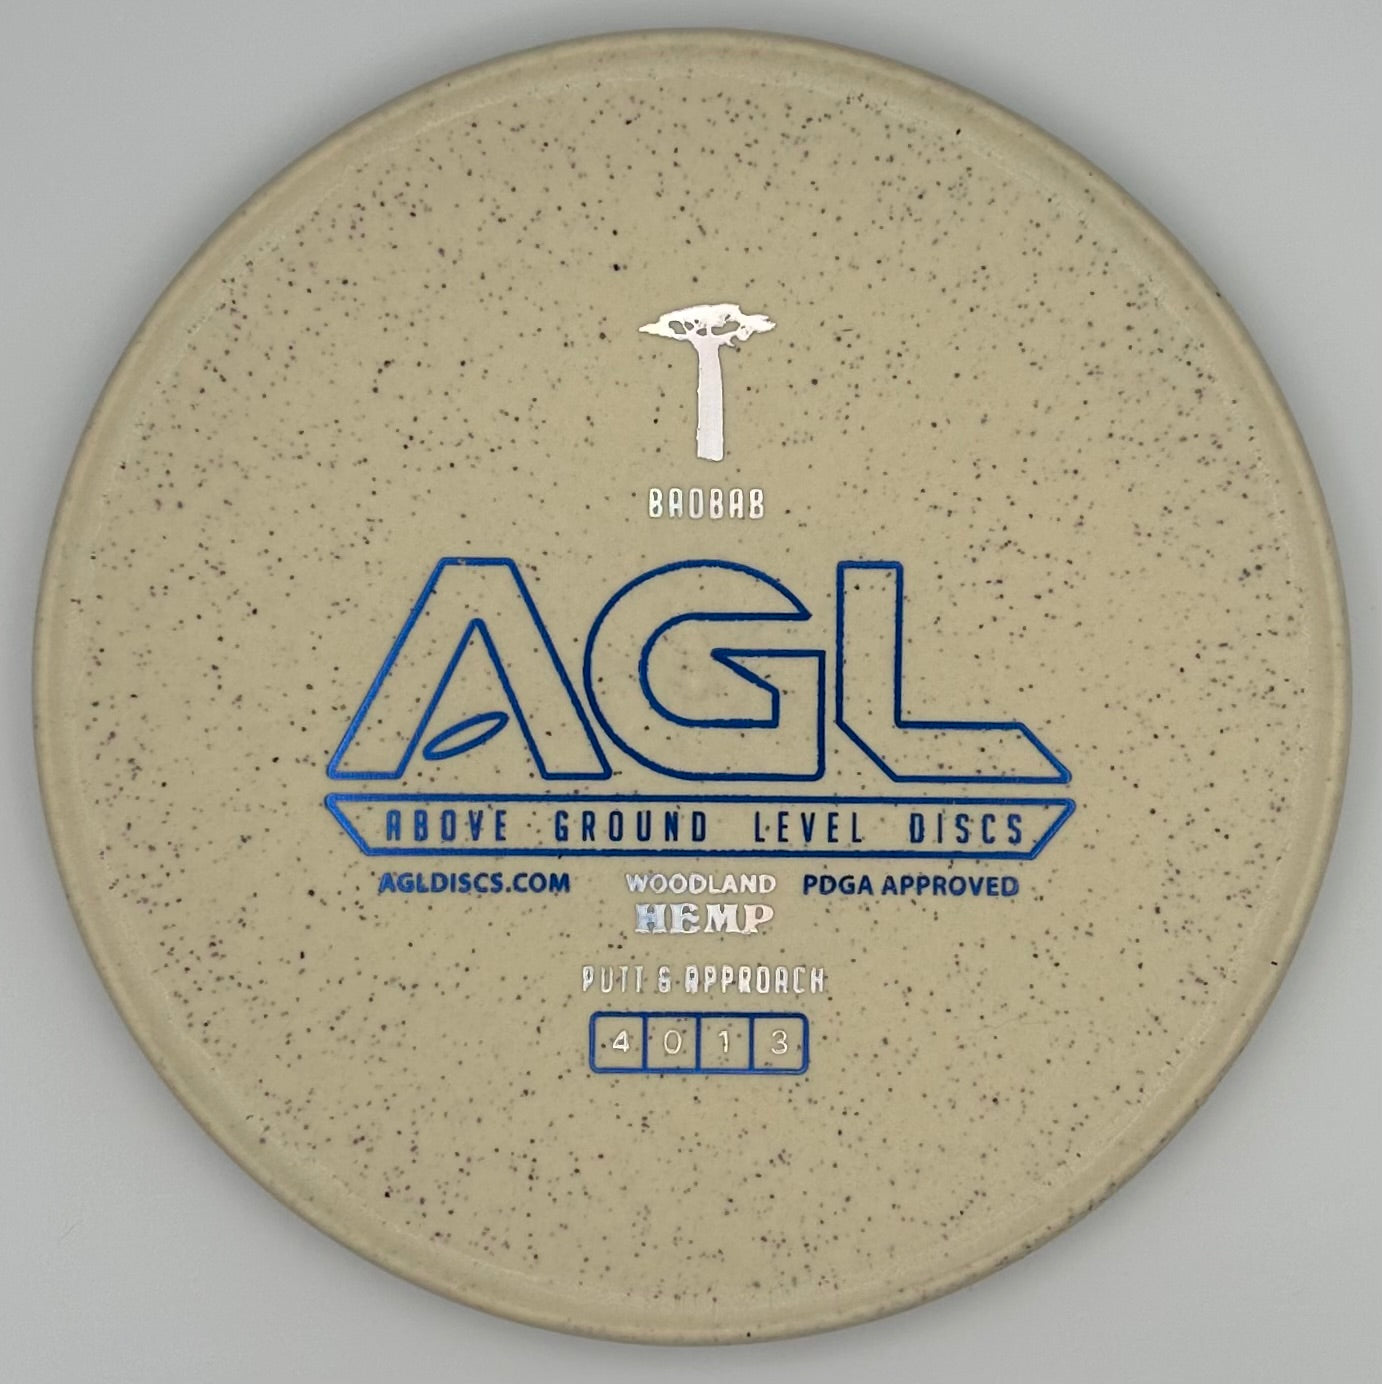 AGL Discs - Cookies and Cream Woodland Hemp Baobab (AGL Bar Stamp)